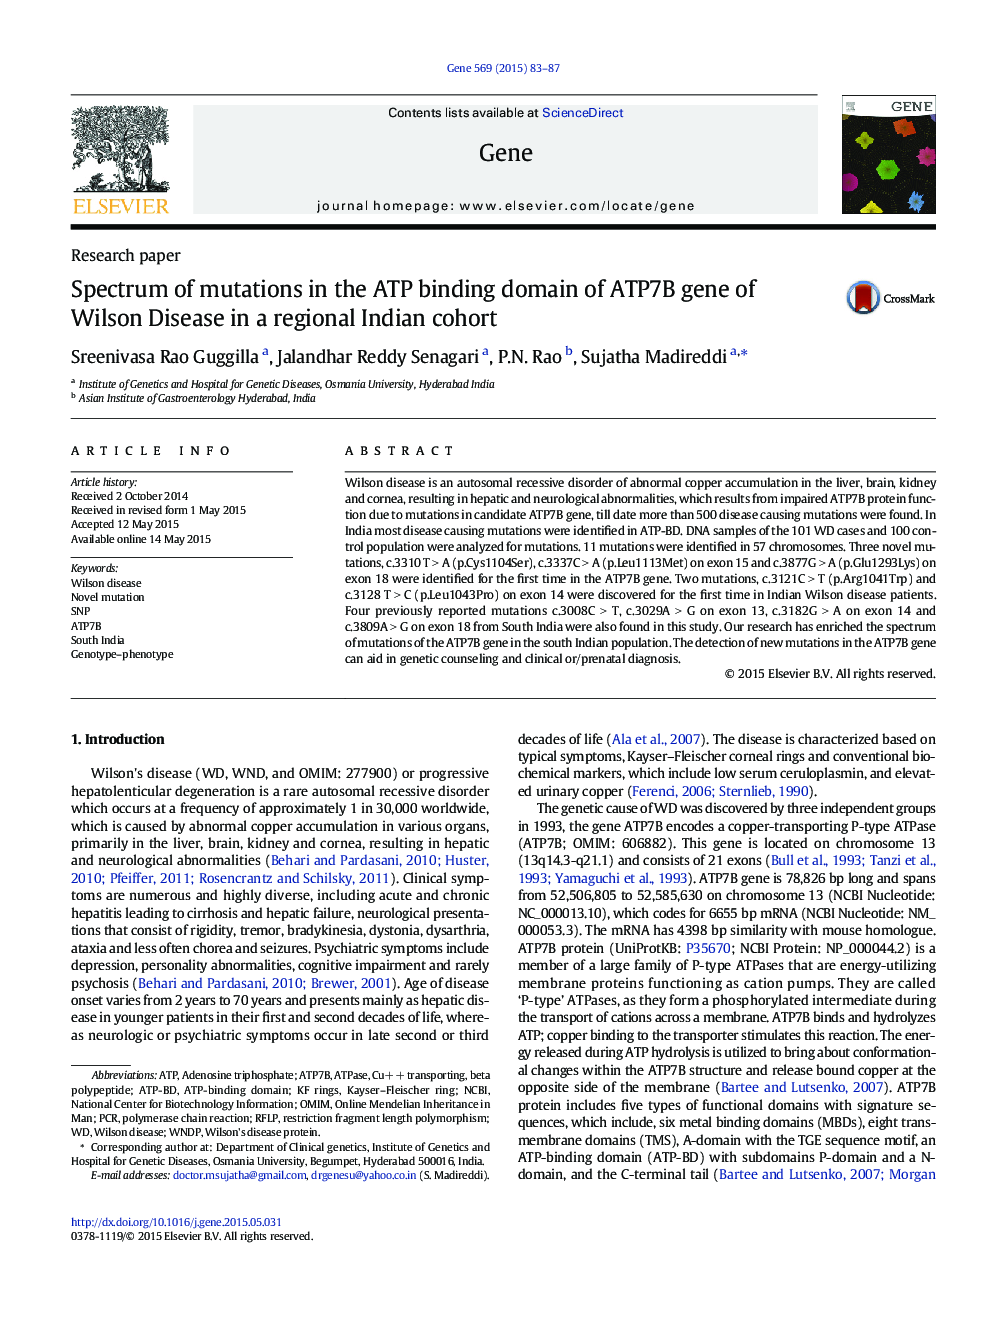 Spectrum of mutations in the ATP binding domain of ATP7B gene of Wilson Disease in a regional Indian cohort